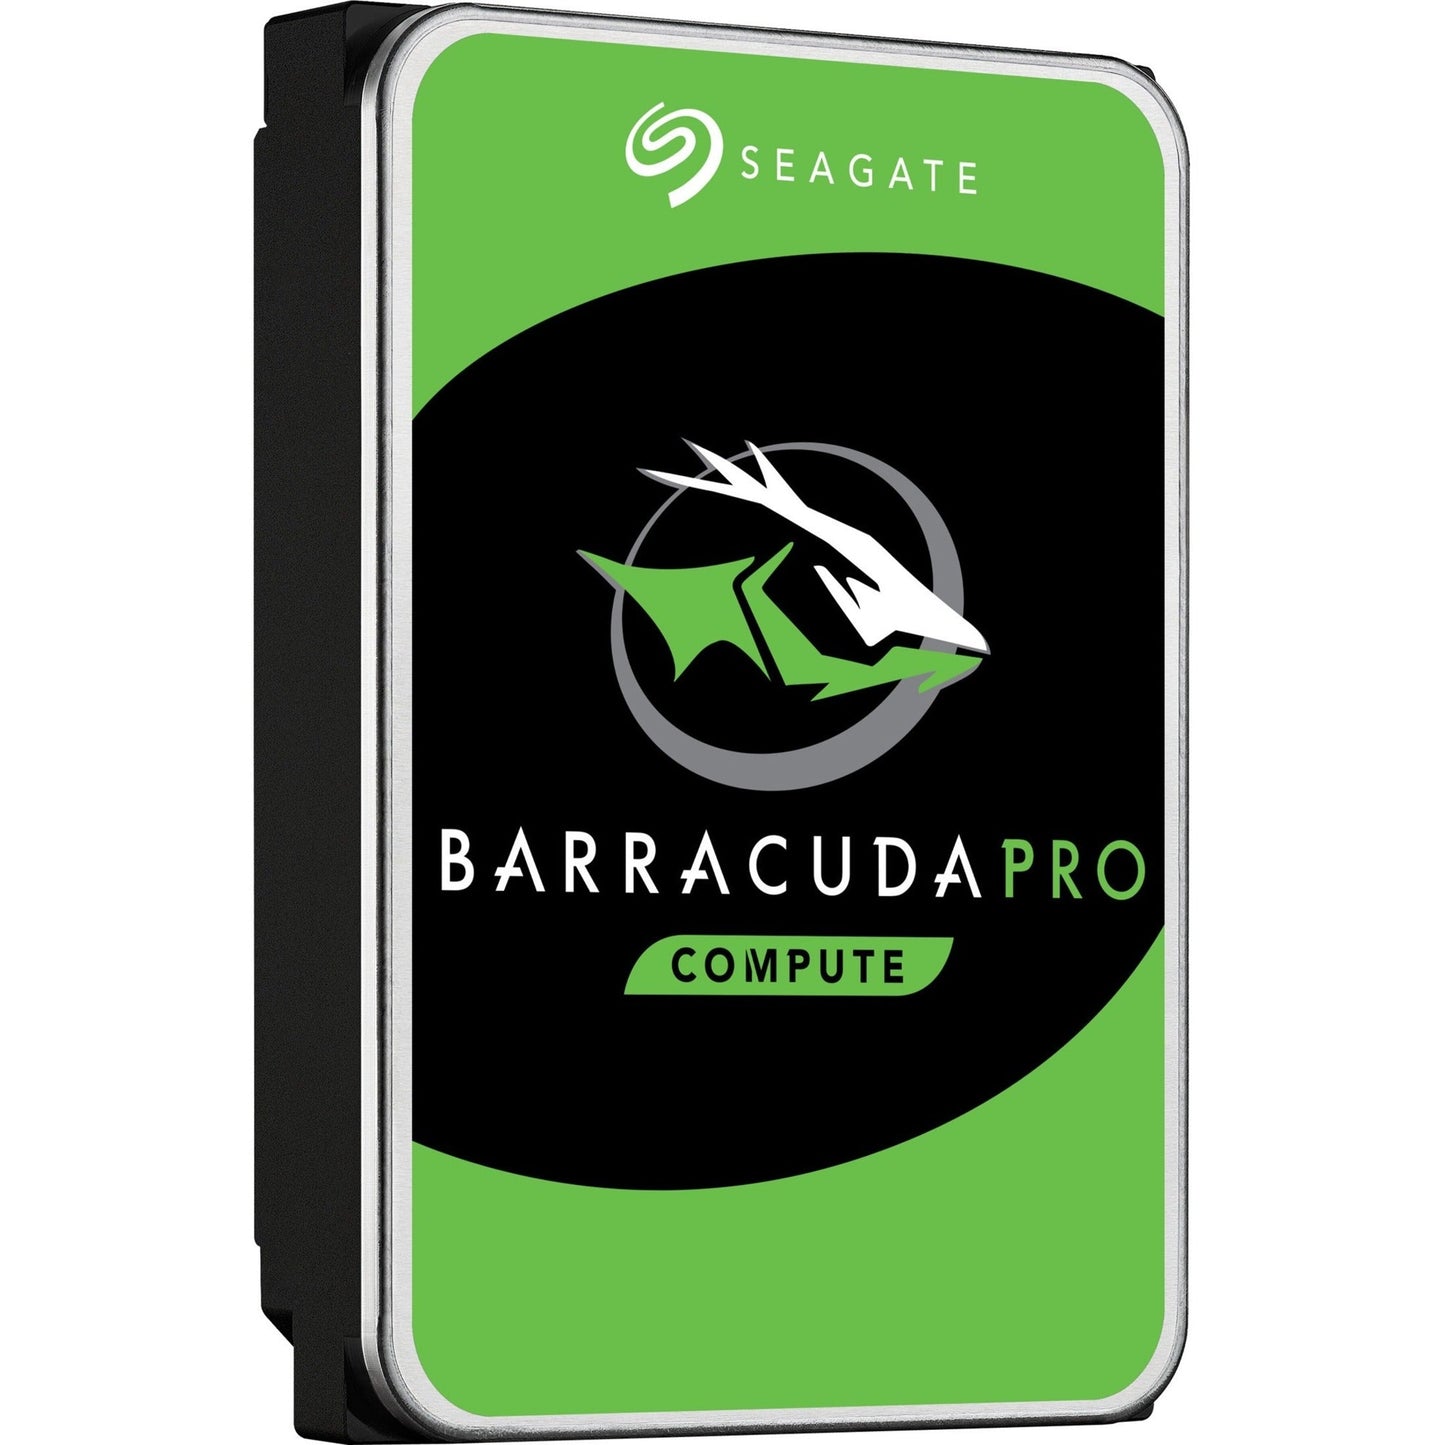 Seagate Barracuda Pro ST1000LM049 1 TB 2.5" Internal Hard Drive - SATA